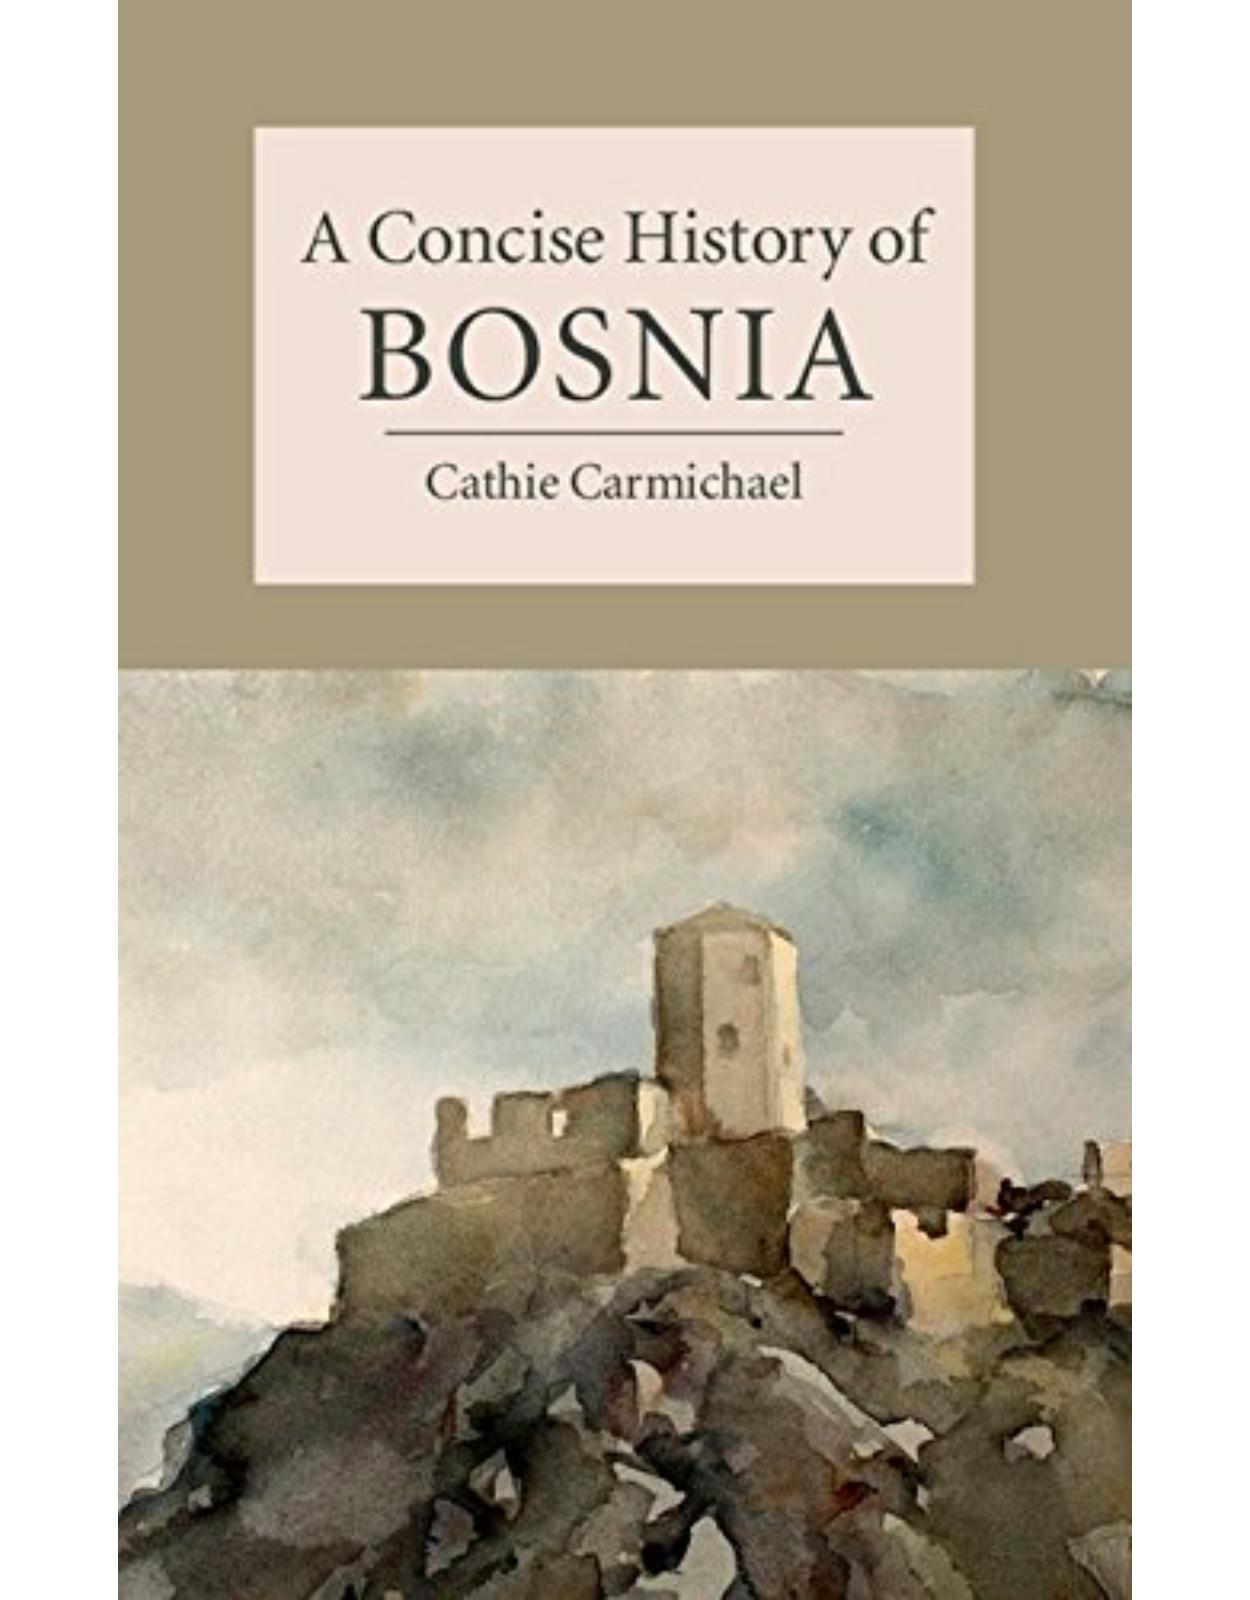 A Concise History of Bosnia (Cambridge Concise Histories) 